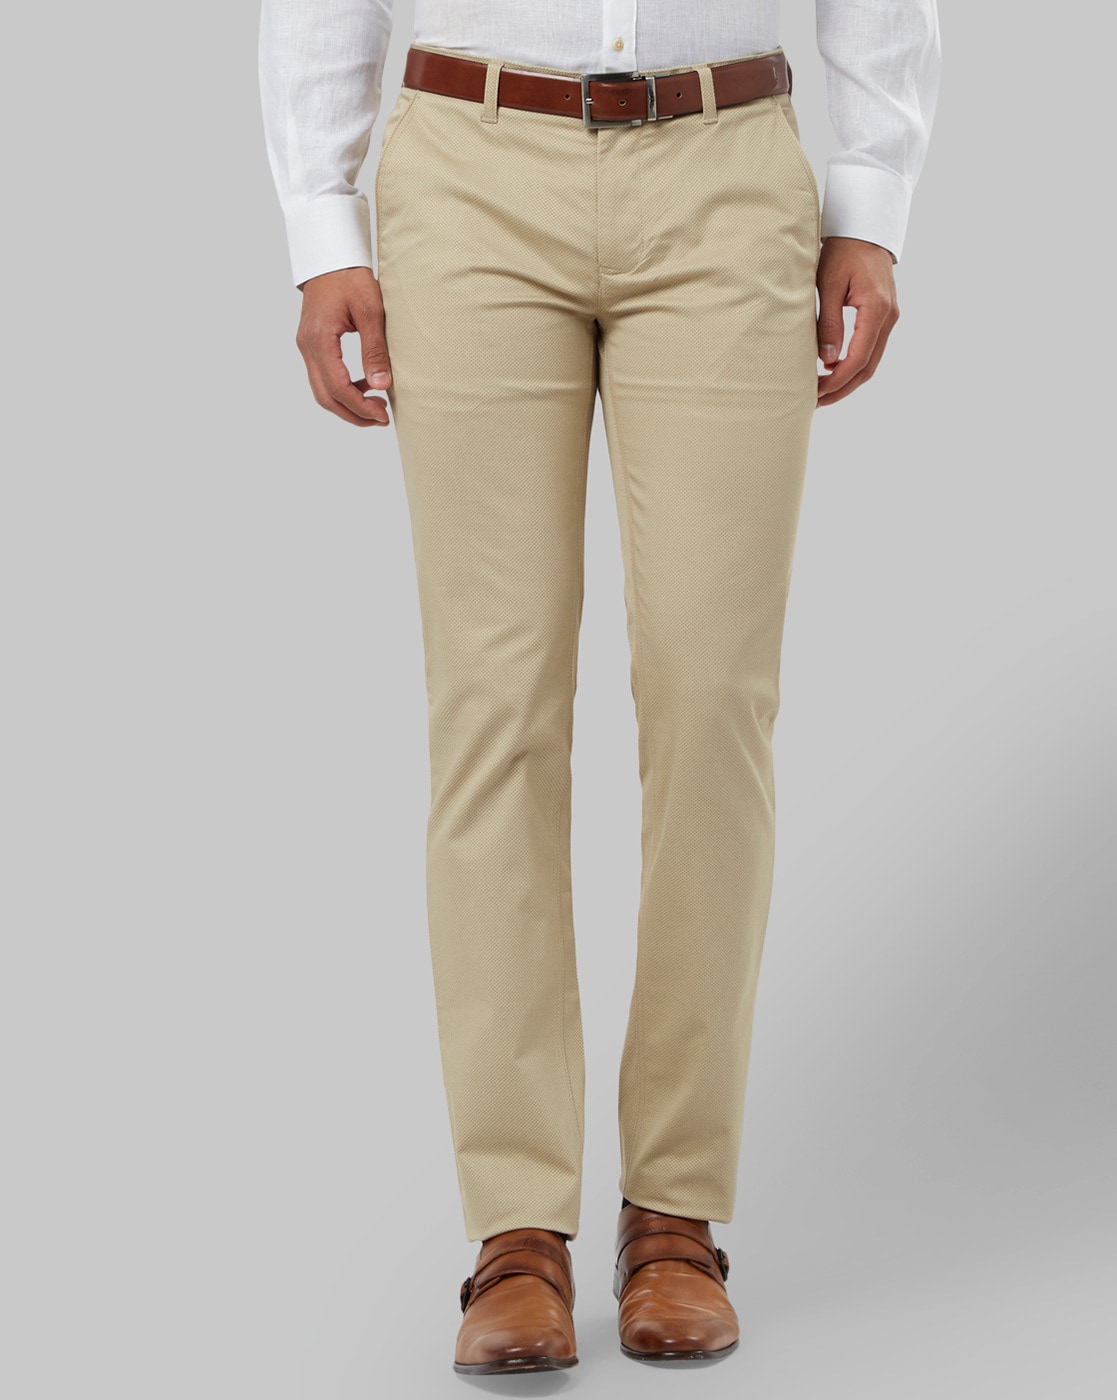 Trouser Pant Beige Mens Formal Non Pleated Trouser  MT108